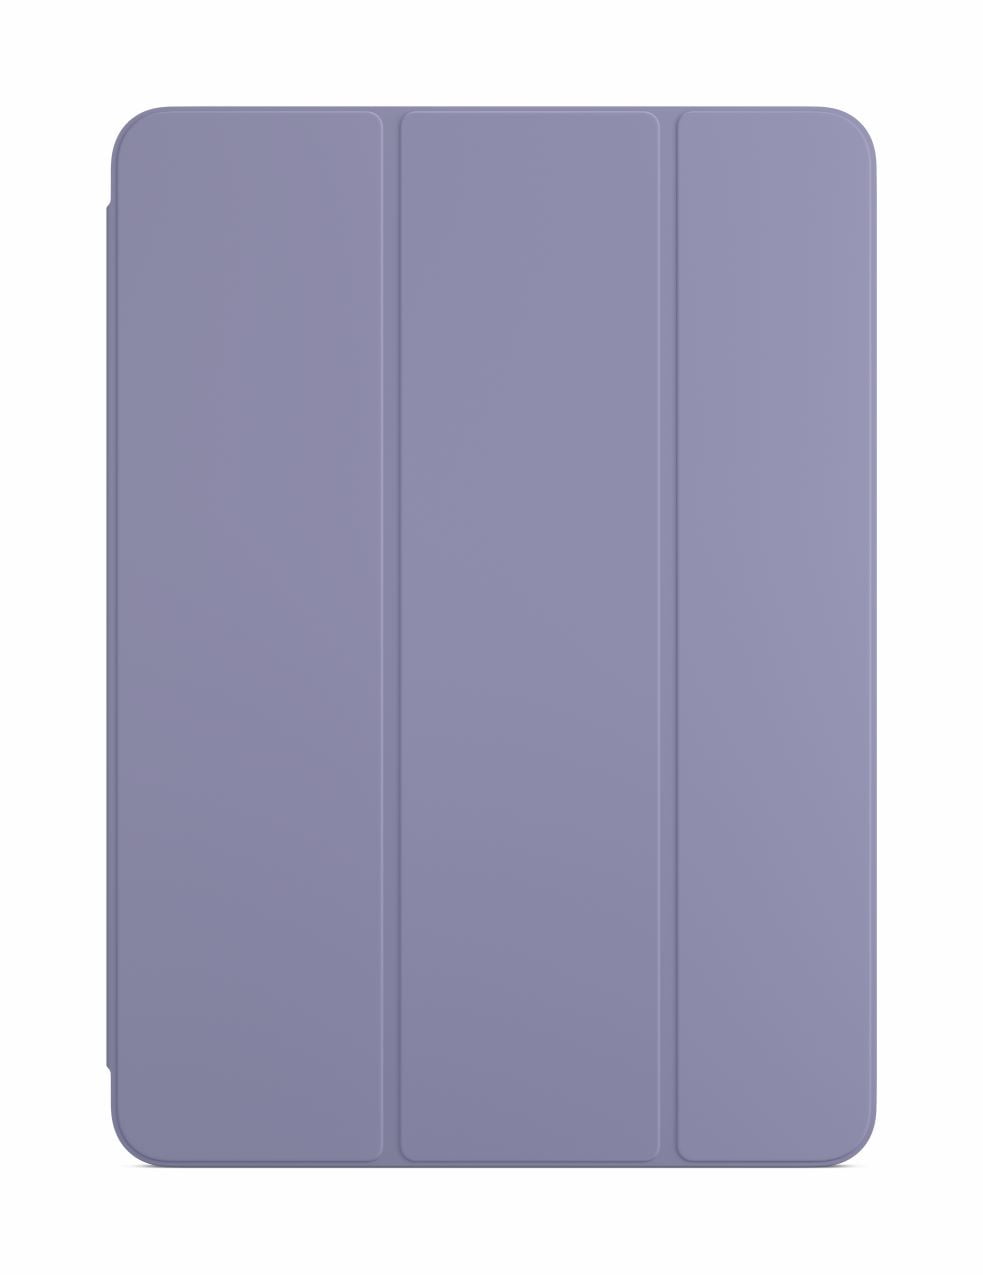 Stole på Kunstneriske ros Smart Folio for iPad Air (5th generation) - English Lavender - Walmart.com